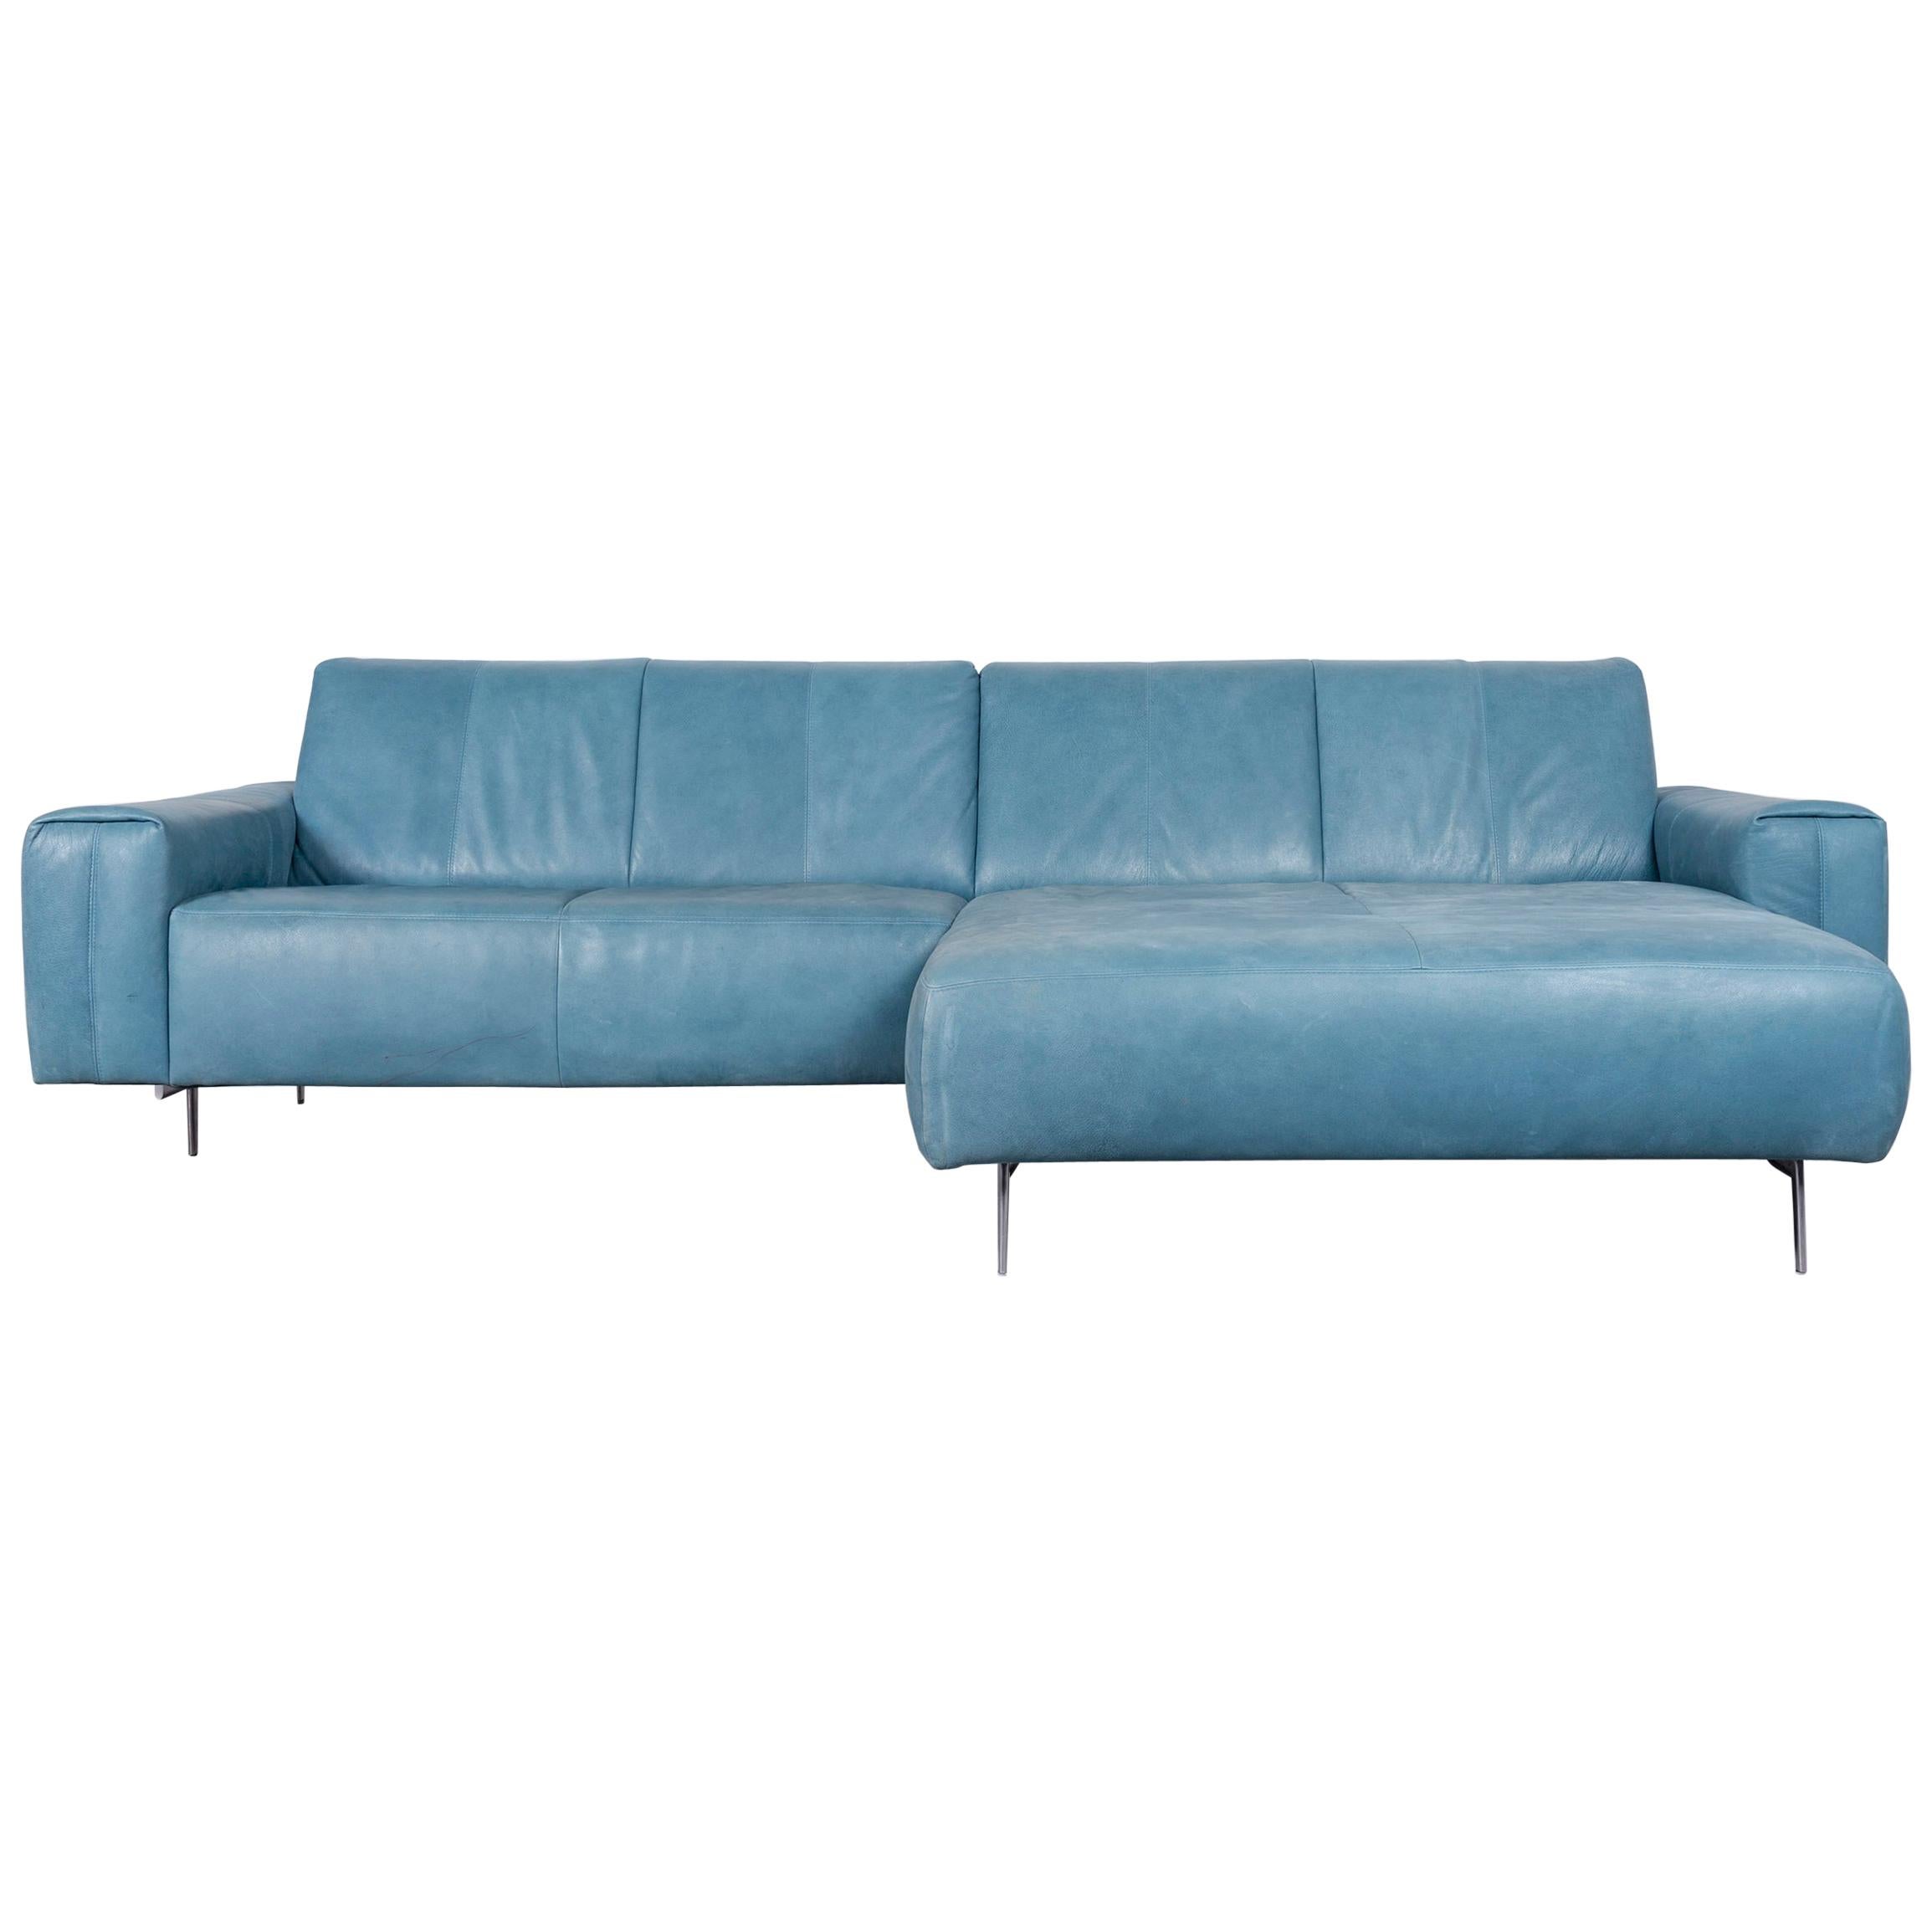 Koinor Garret Designer Leather Sofa in Bleu Corner, Sofa Couch For Sale